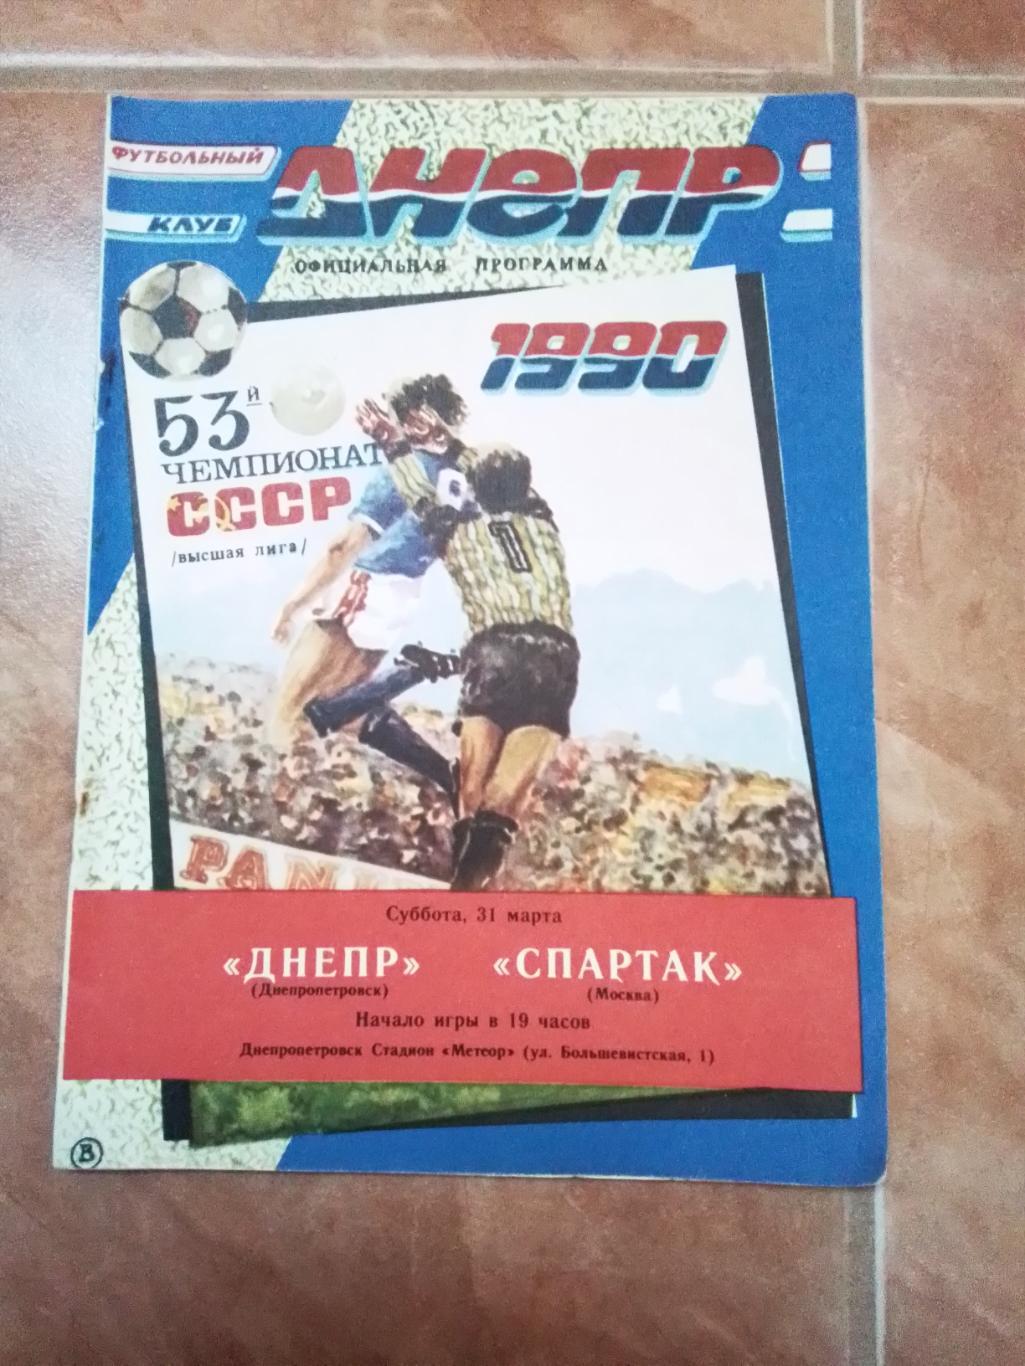 Днепр Днепропетровск - Спартак Москва 1990